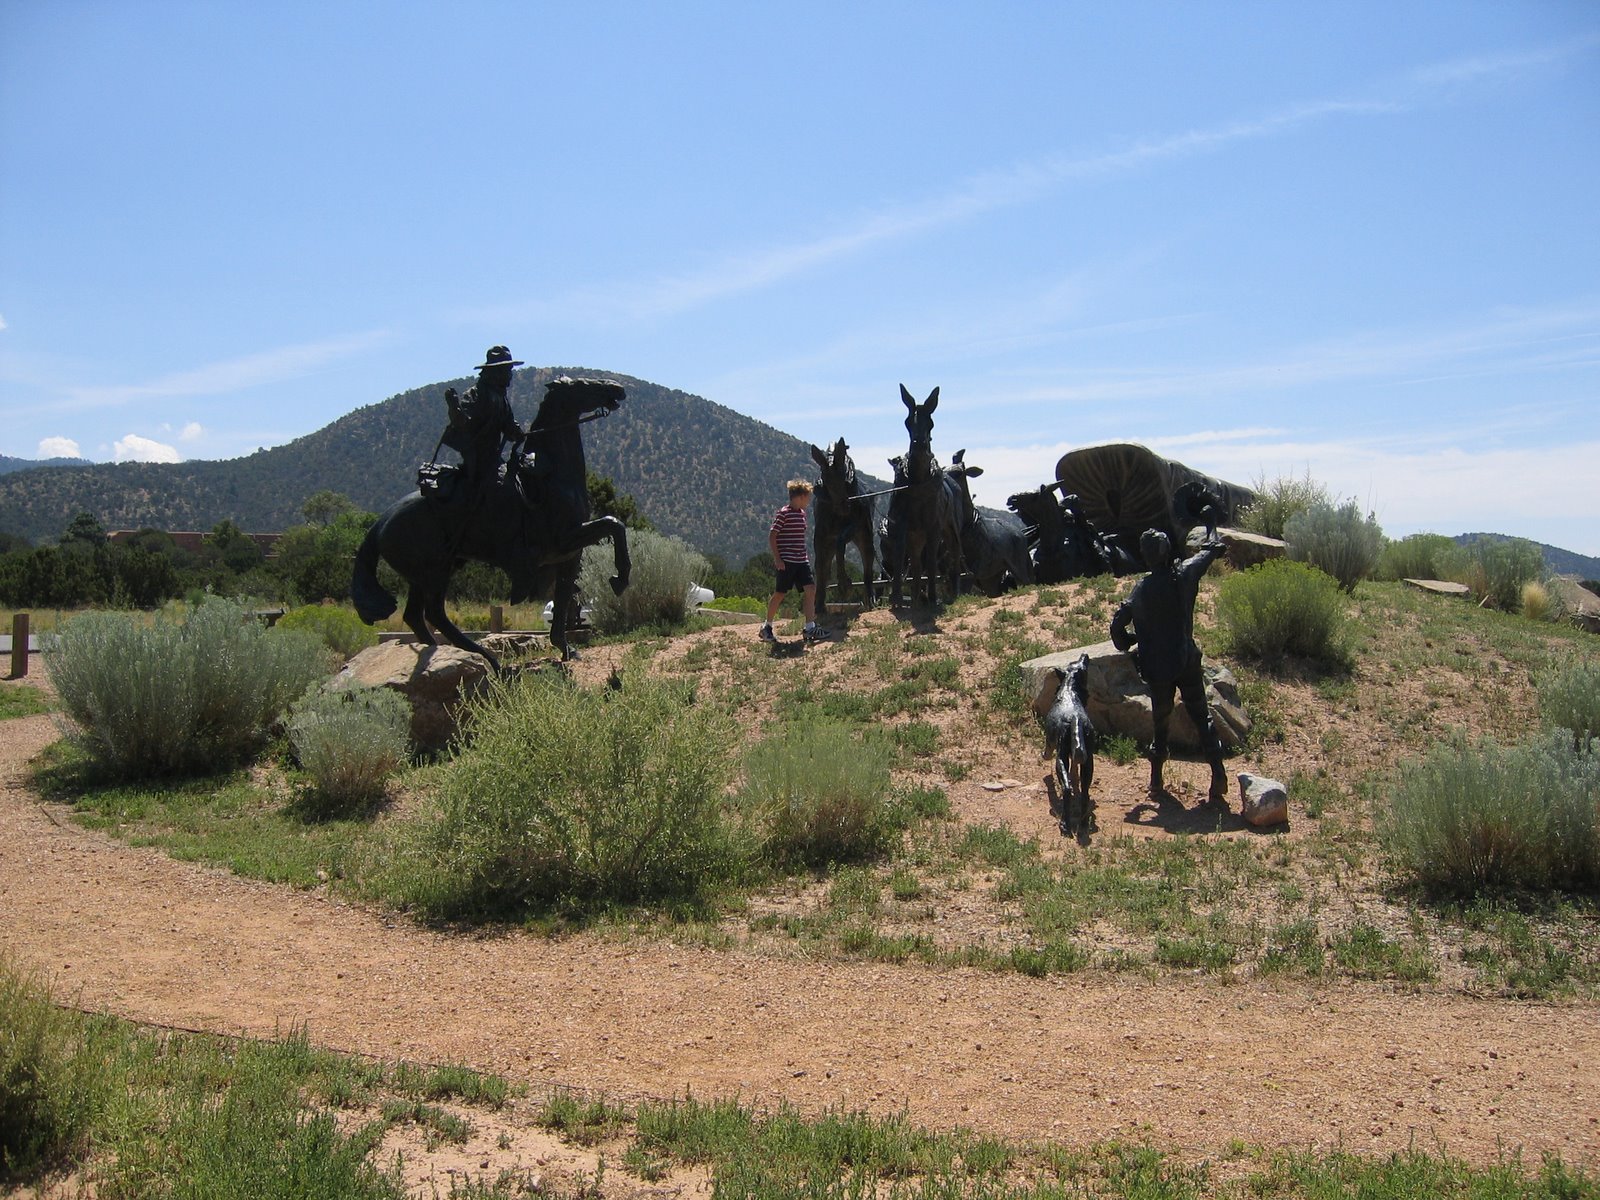 Journey's End Santa Fe Trail